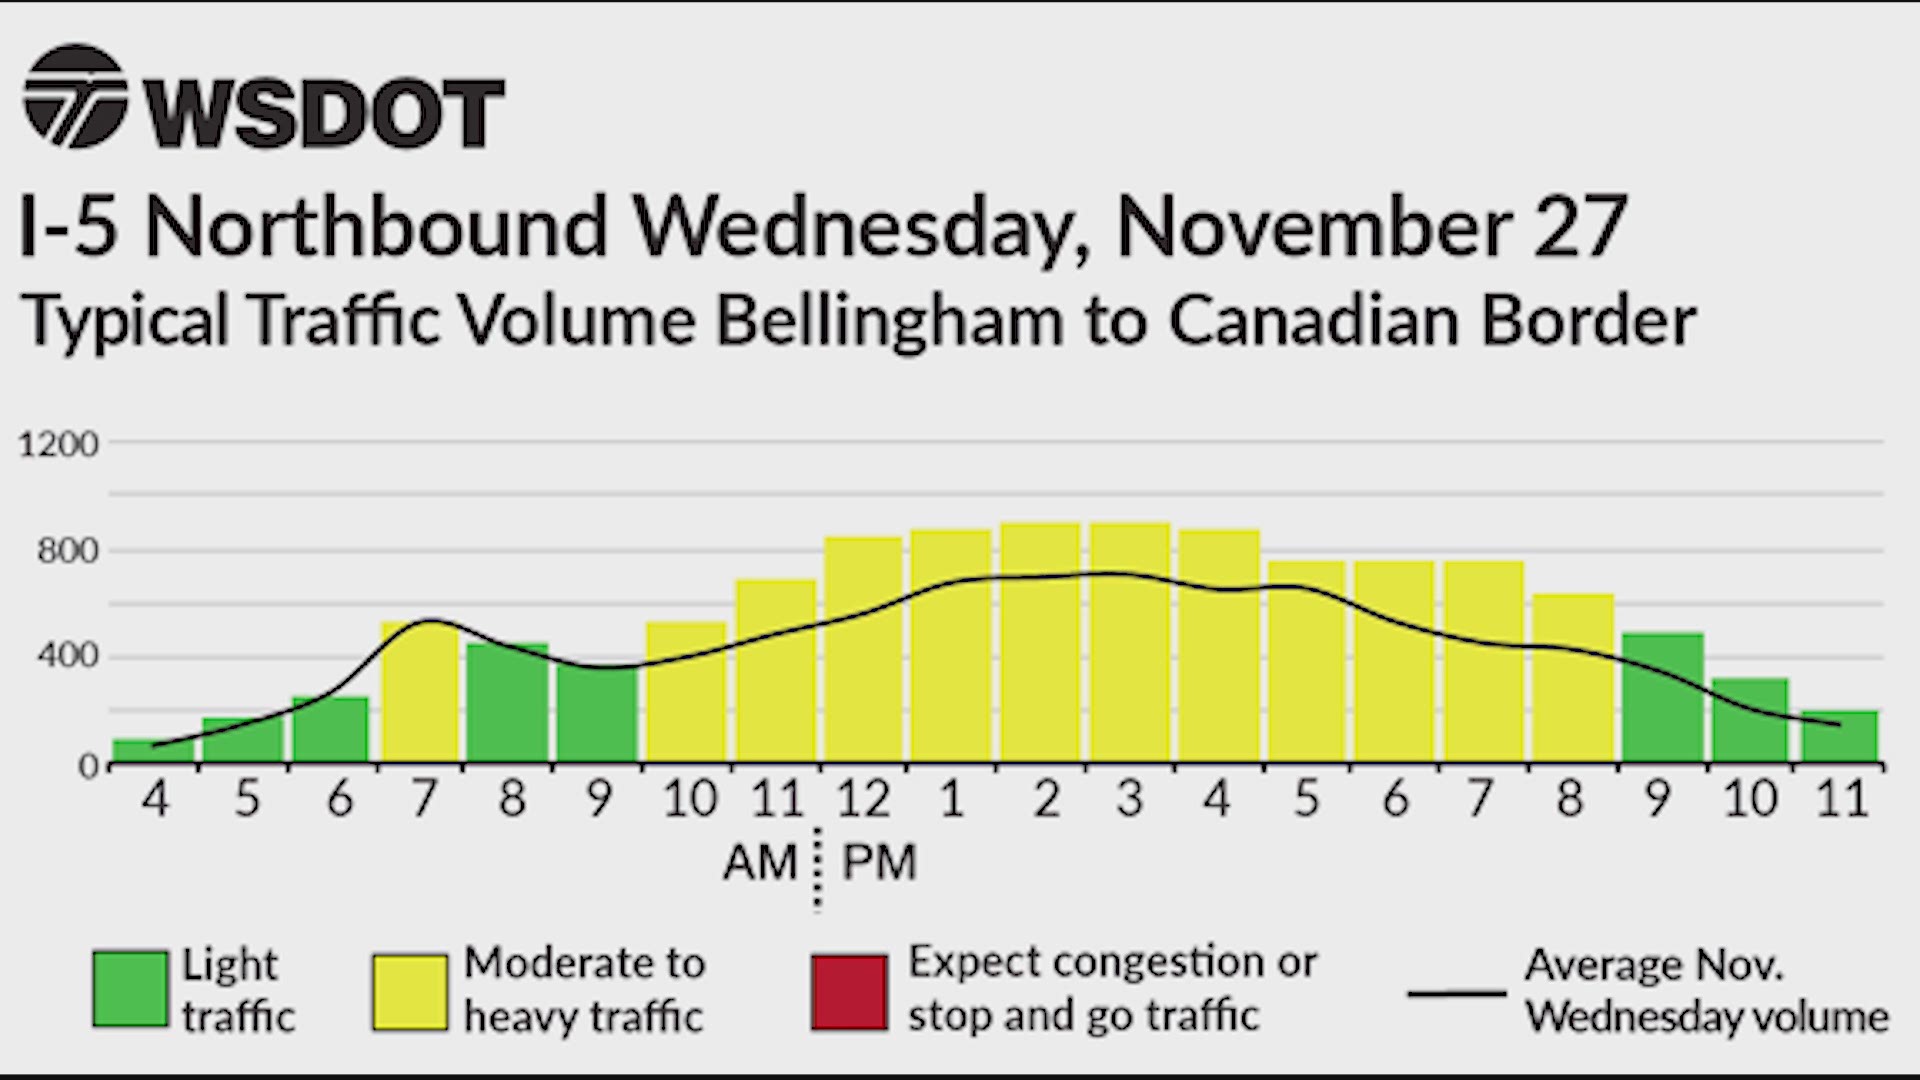 WSDOT traffic volume estimates for Wednesday 11/27